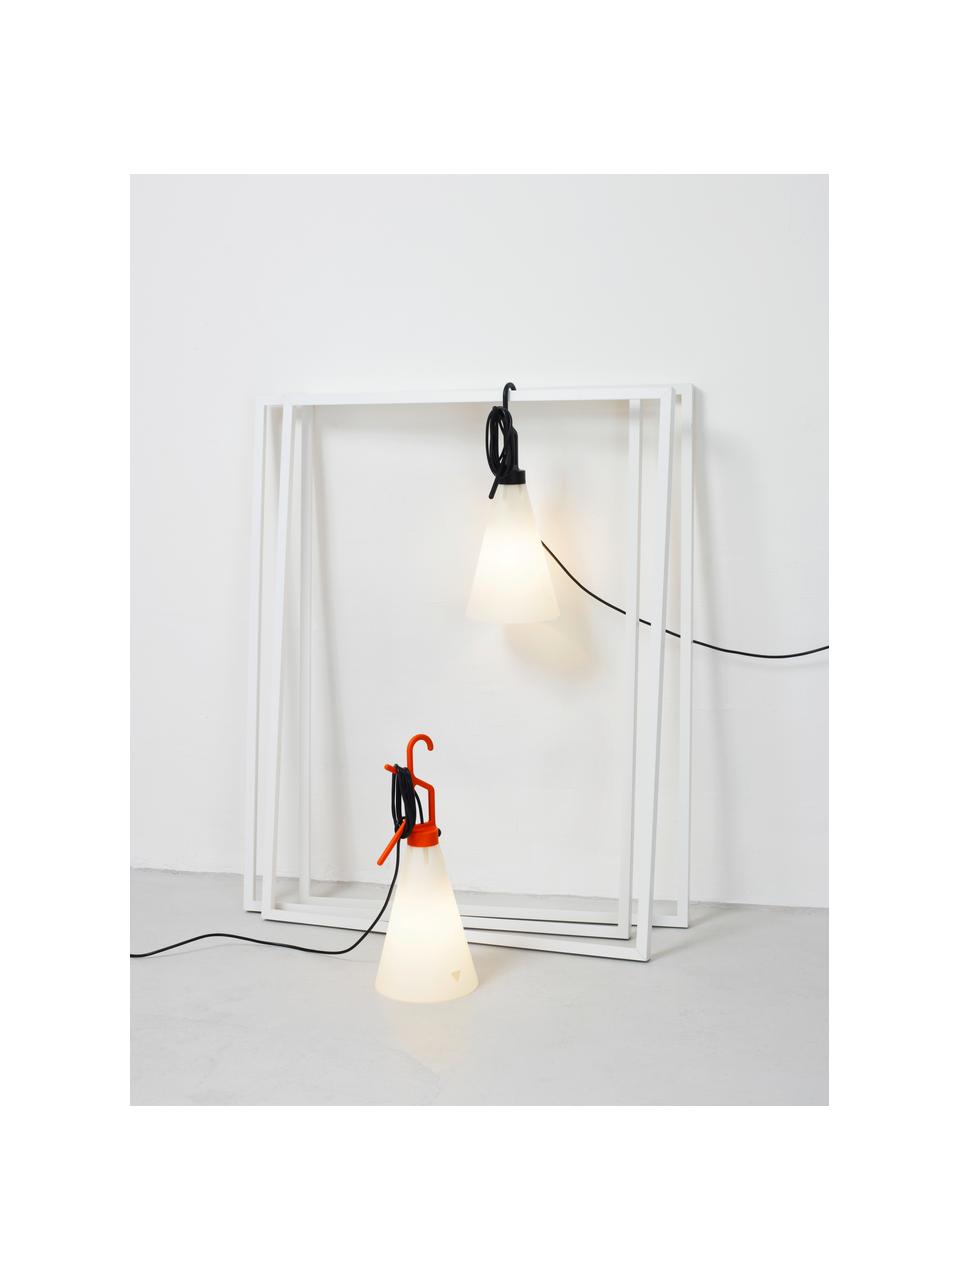 Lampada da tavolo Mayday, Plastica, Arancione, bianco, Ø 23 x Alt. 55 cm